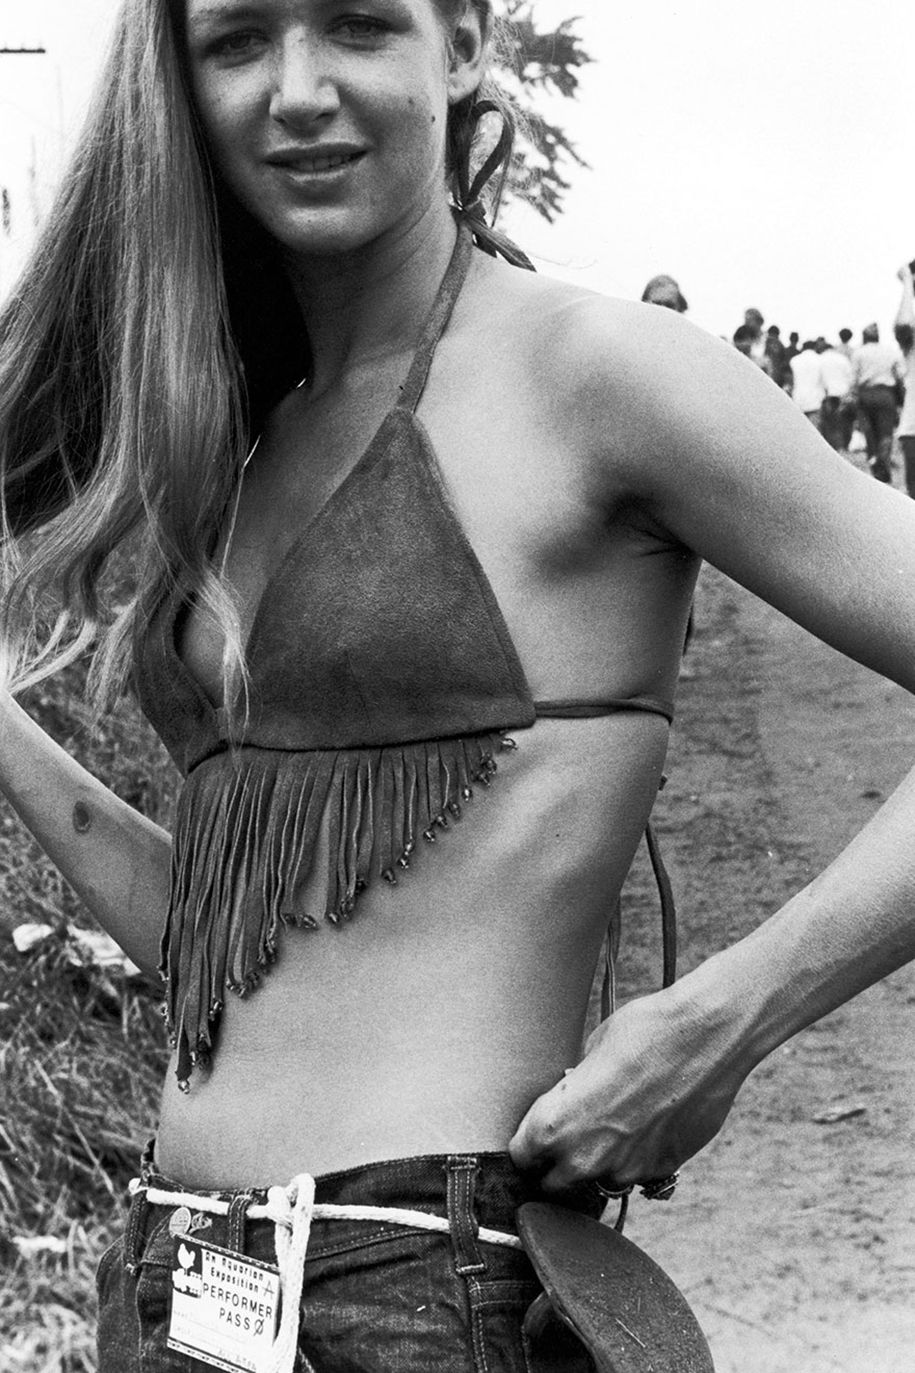 moda-damska-lat 60-tych-woodstock-1969-2